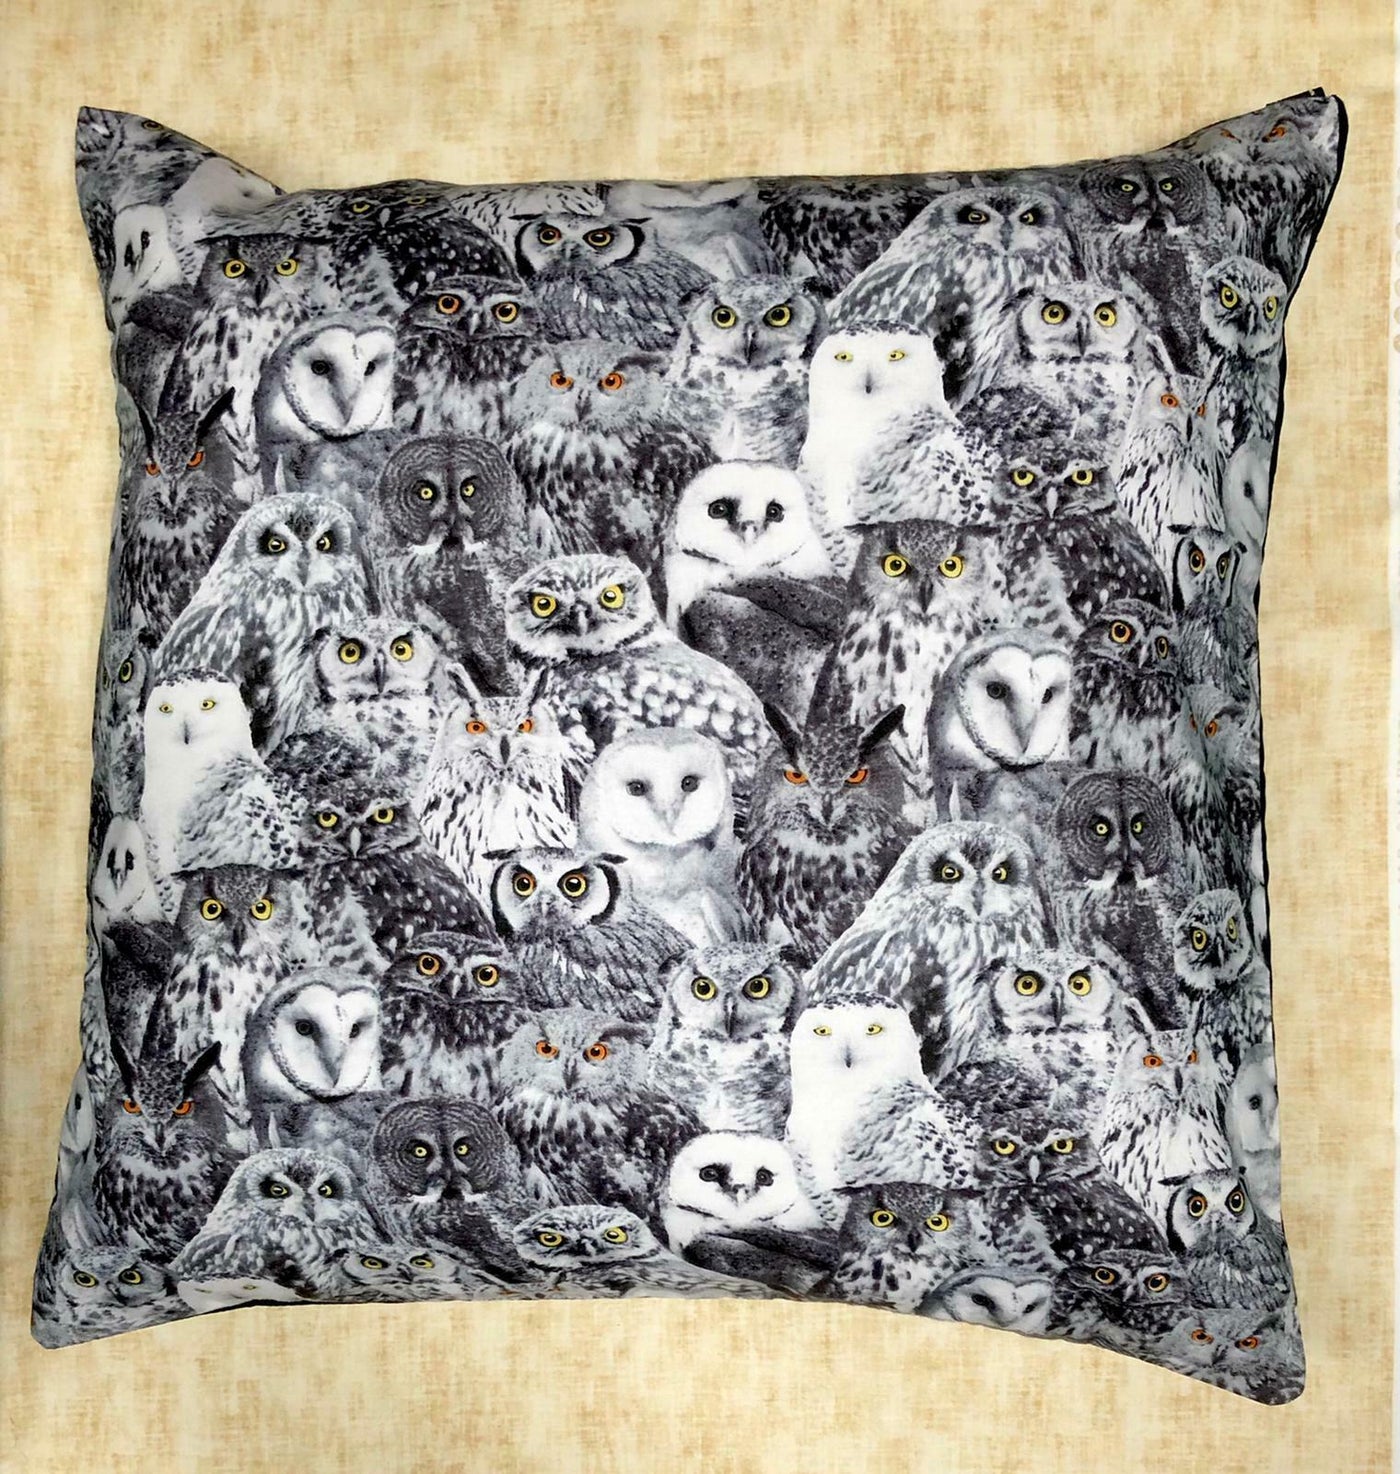 Owl Cushion Cover Decorative Trendy Case fits 18" x 18" Hedwig Barn Tawny Snowy